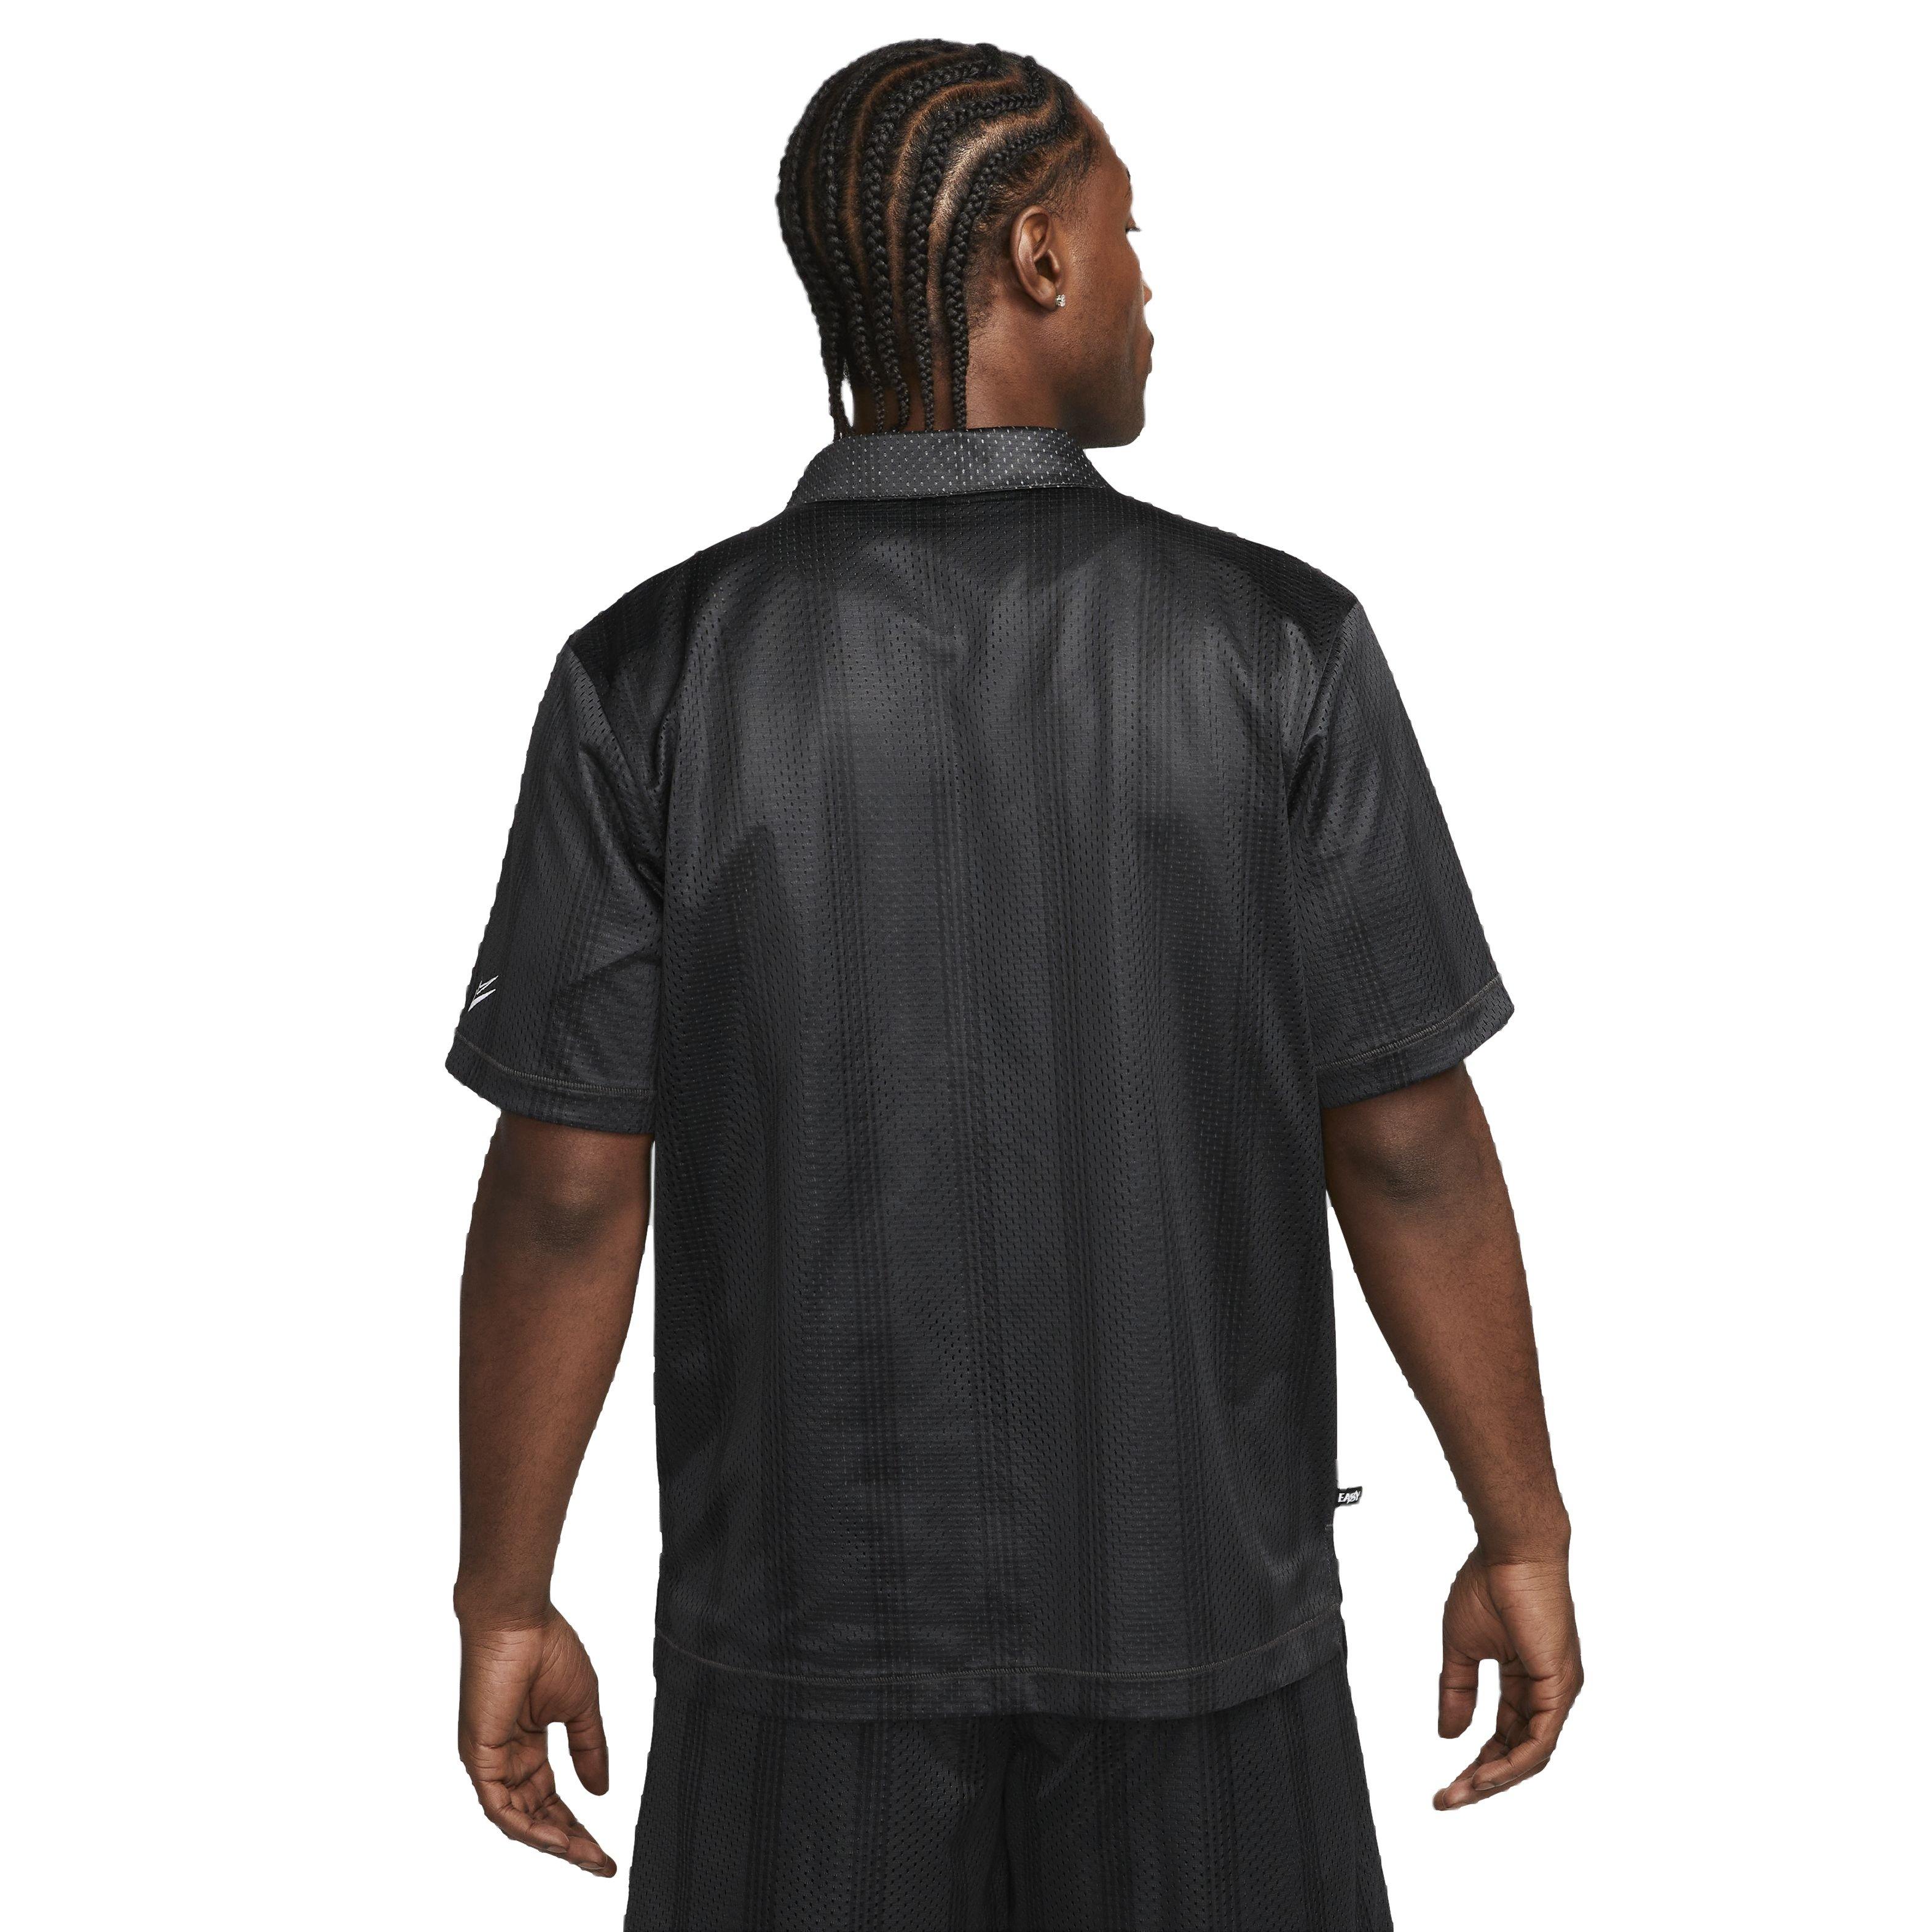 Kevin Durant Men's Full-Zip Short-Sleeve Basketball Top